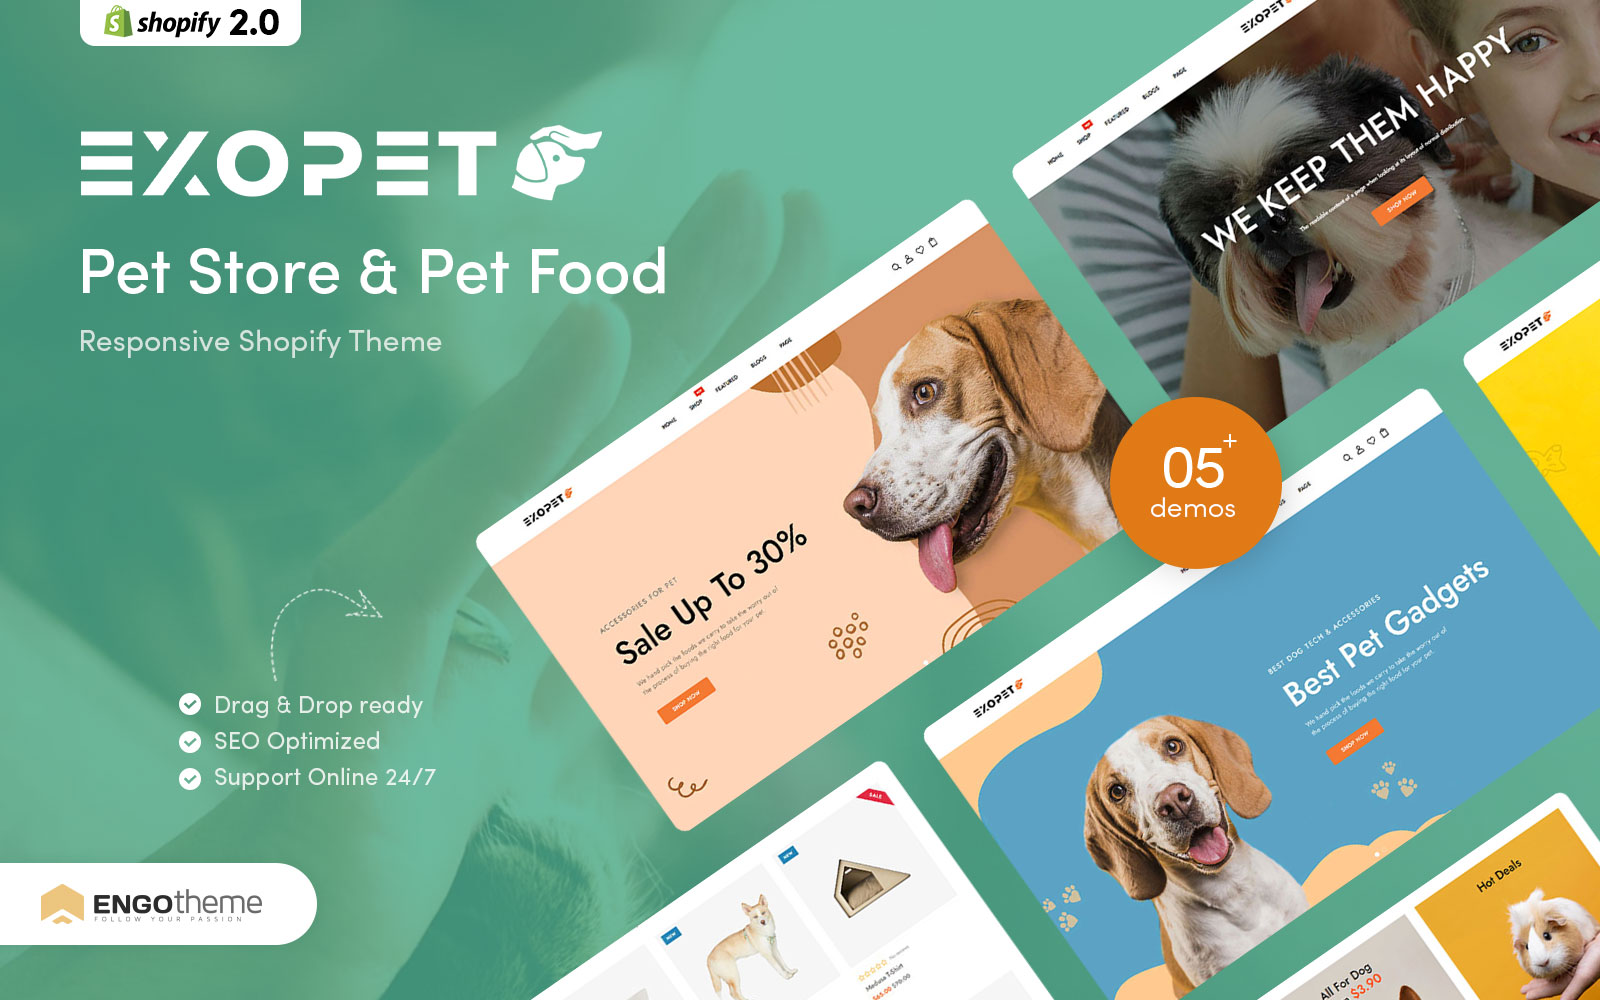 Exopet - Pet Store & Pet Food Responsive Shopify Theme